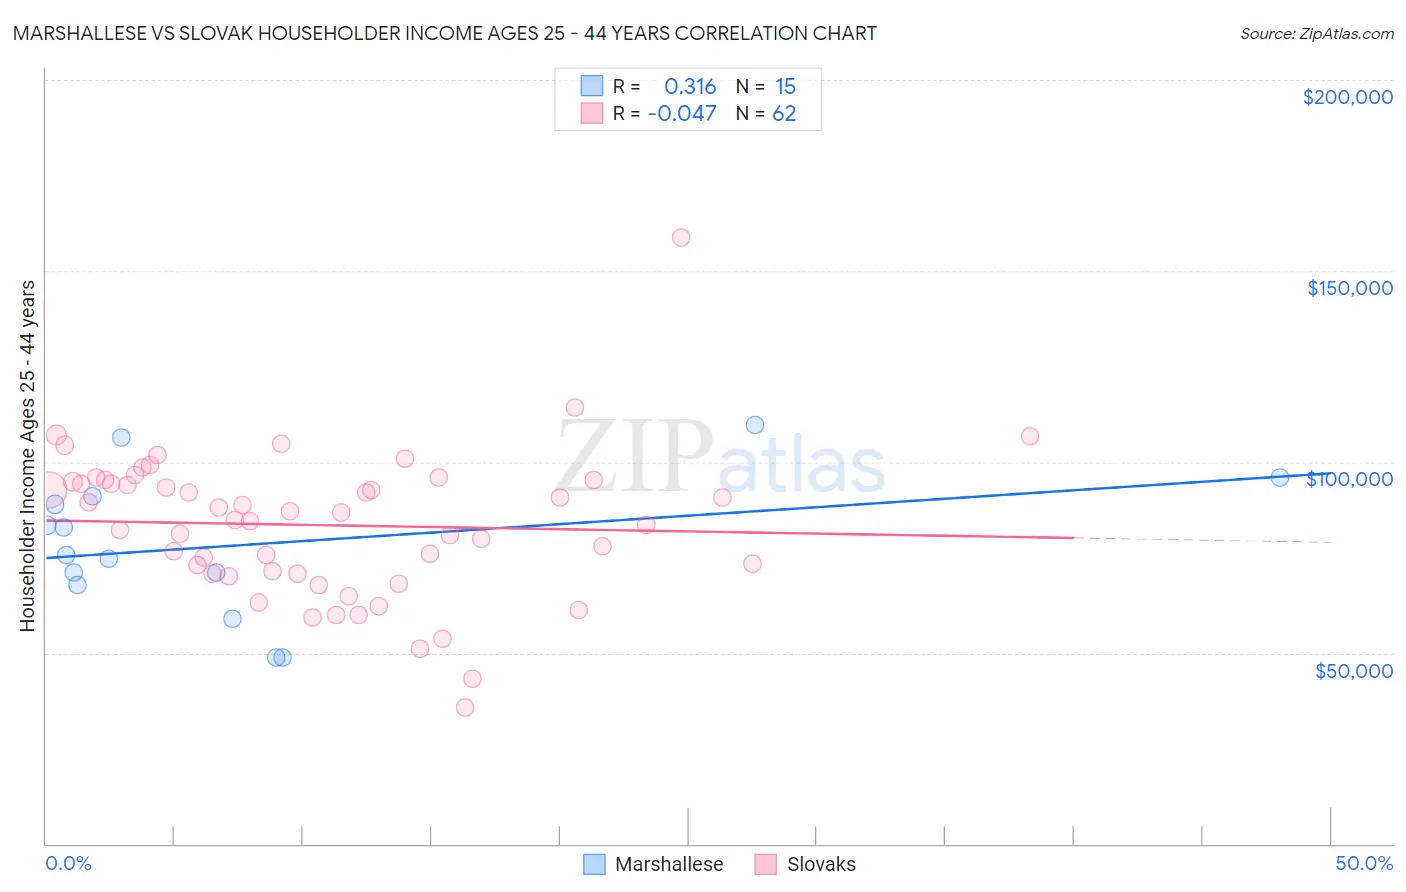 Marshallese vs Slovak Householder Income Ages 25 - 44 years